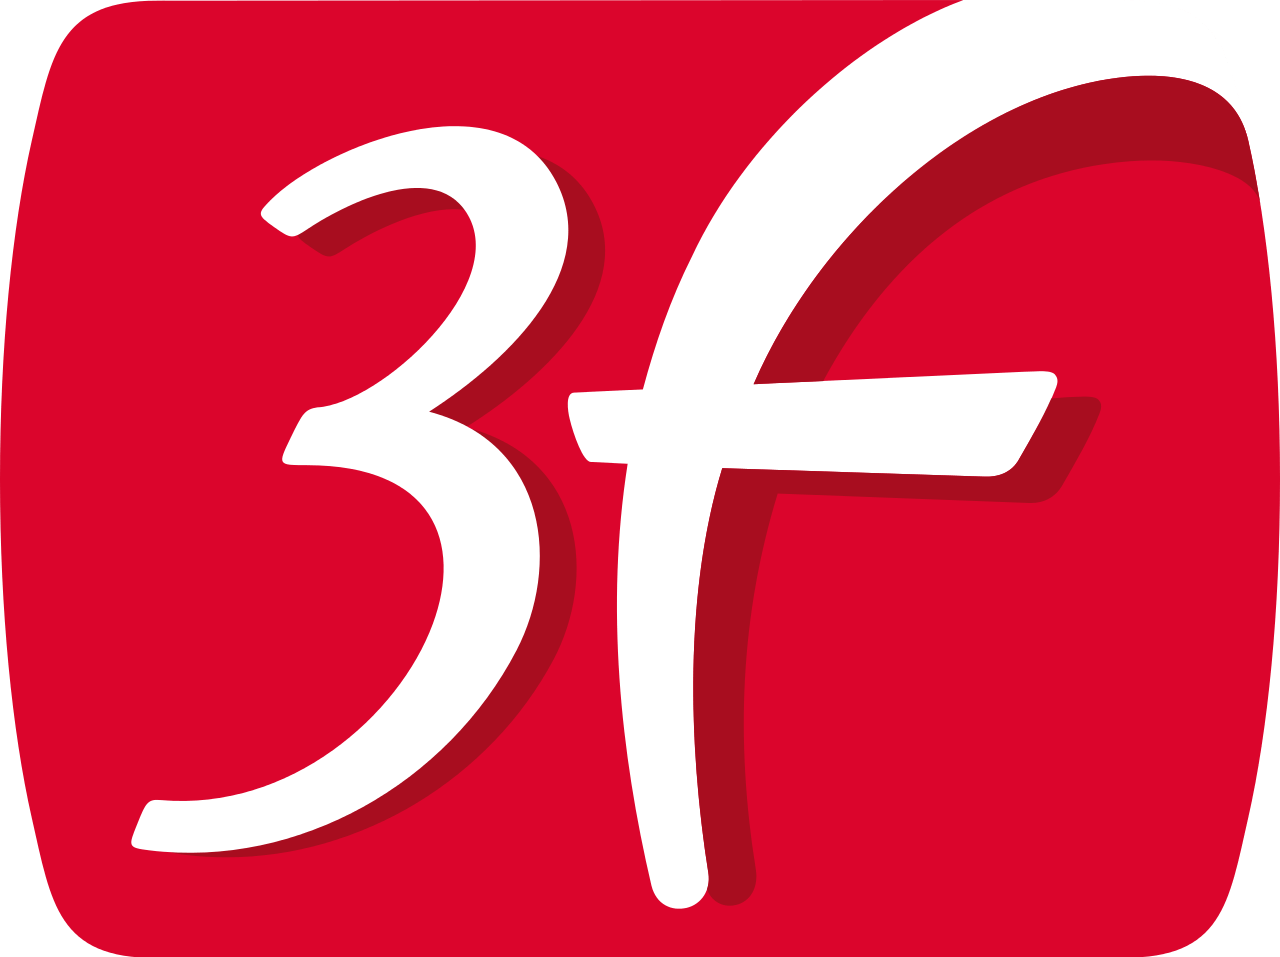 3 F Logo - Index of /wp-content/uploads/2016/09